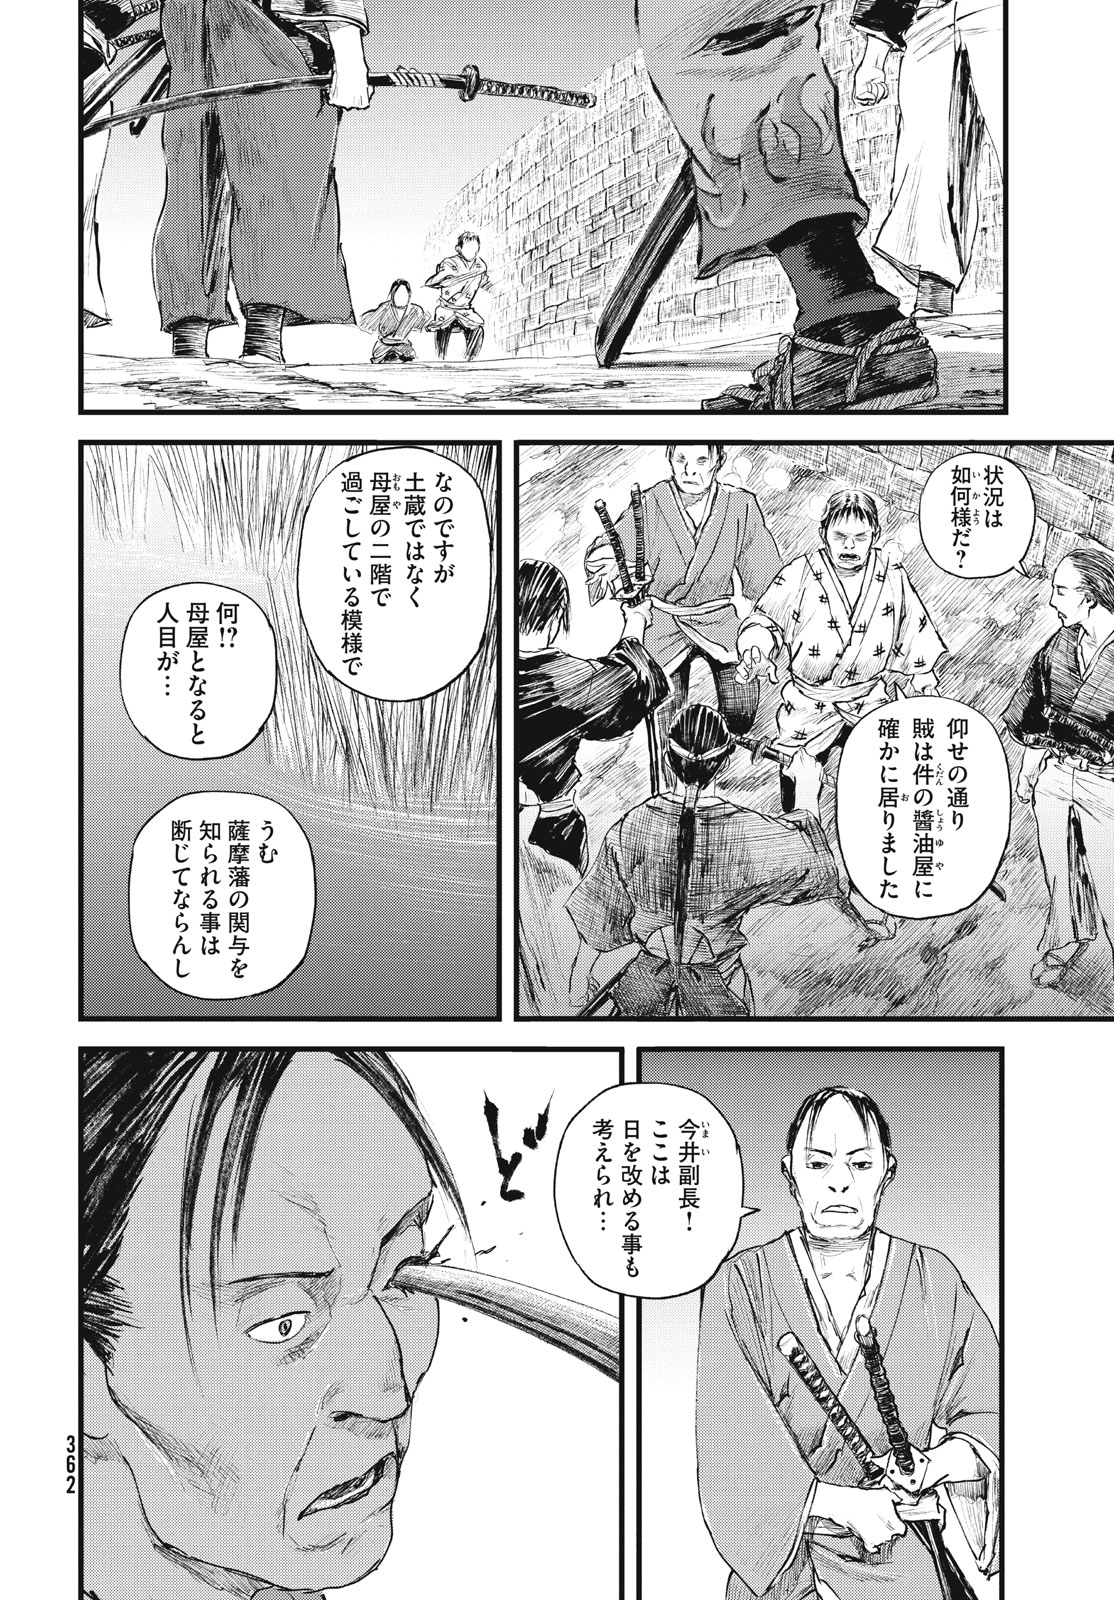 Blade of the Immortal: Bakumatsu Arc - Chapter 54 - Page 16